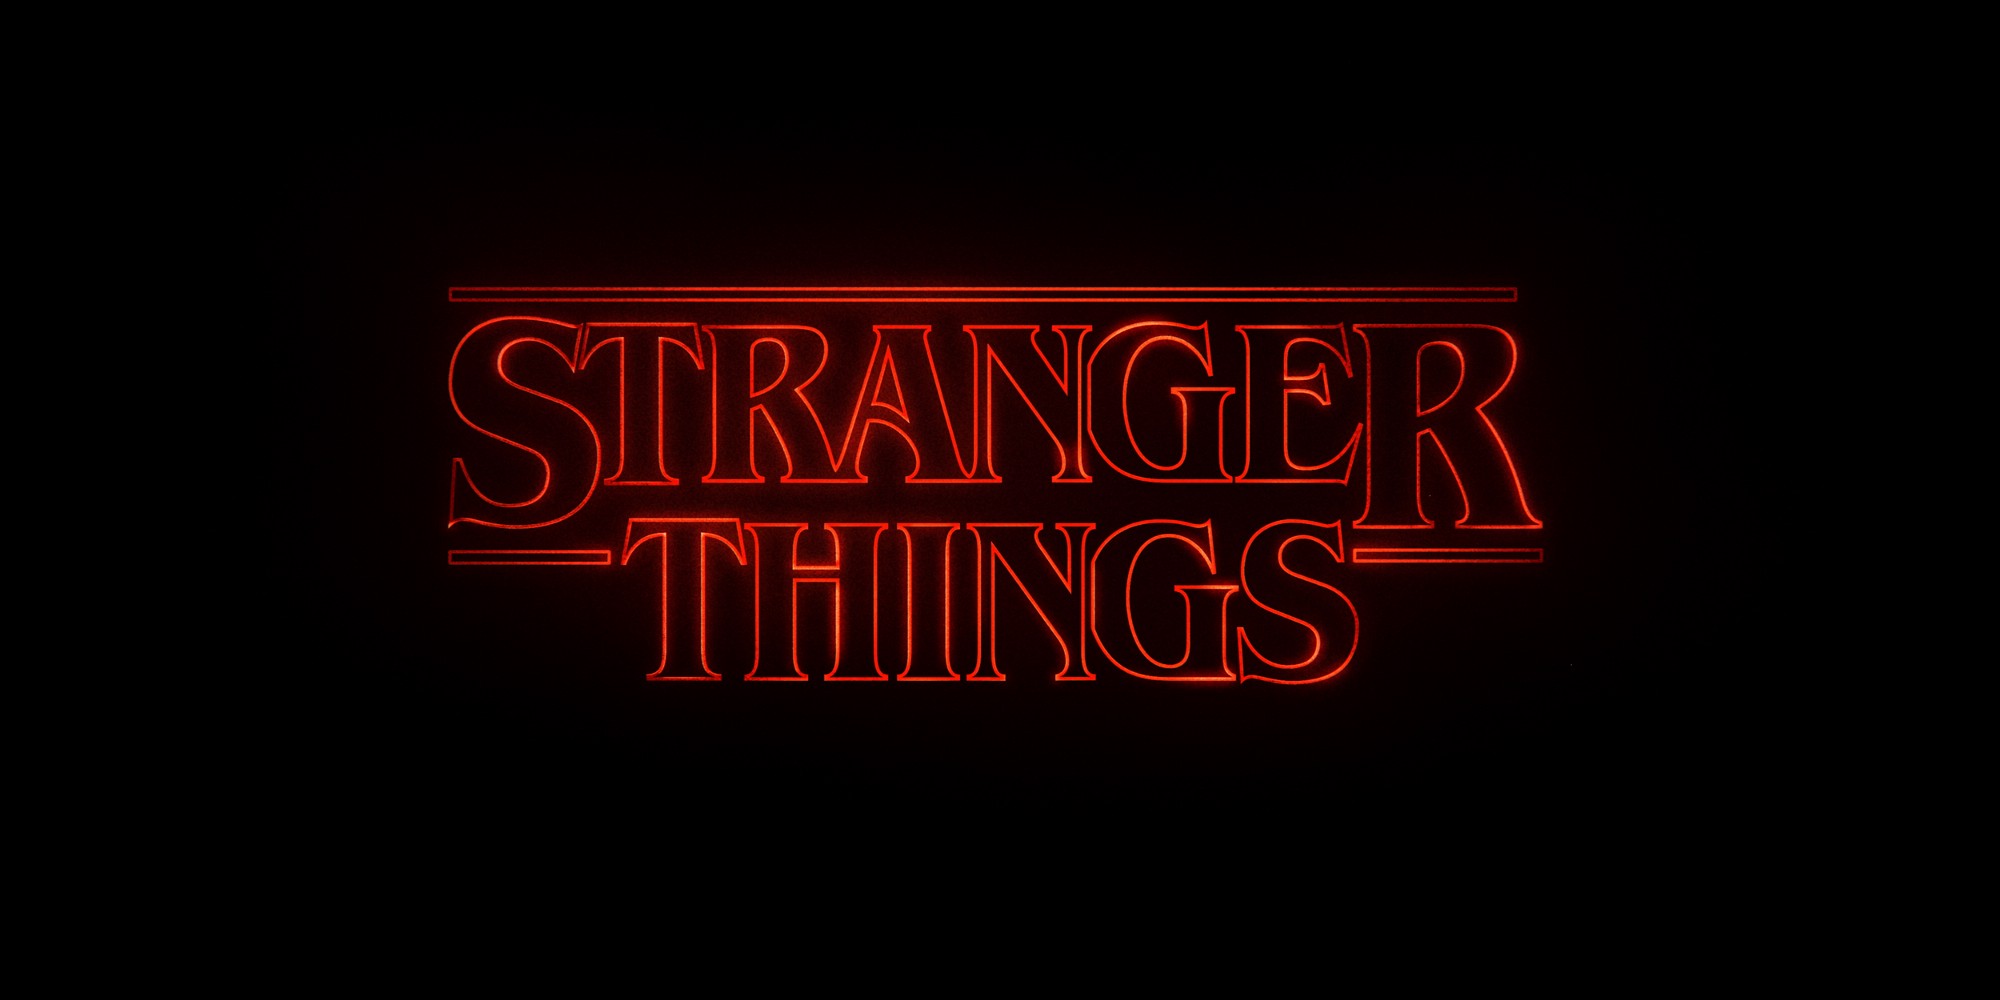 Netflix says ‘stranger things’ season 2 is happening